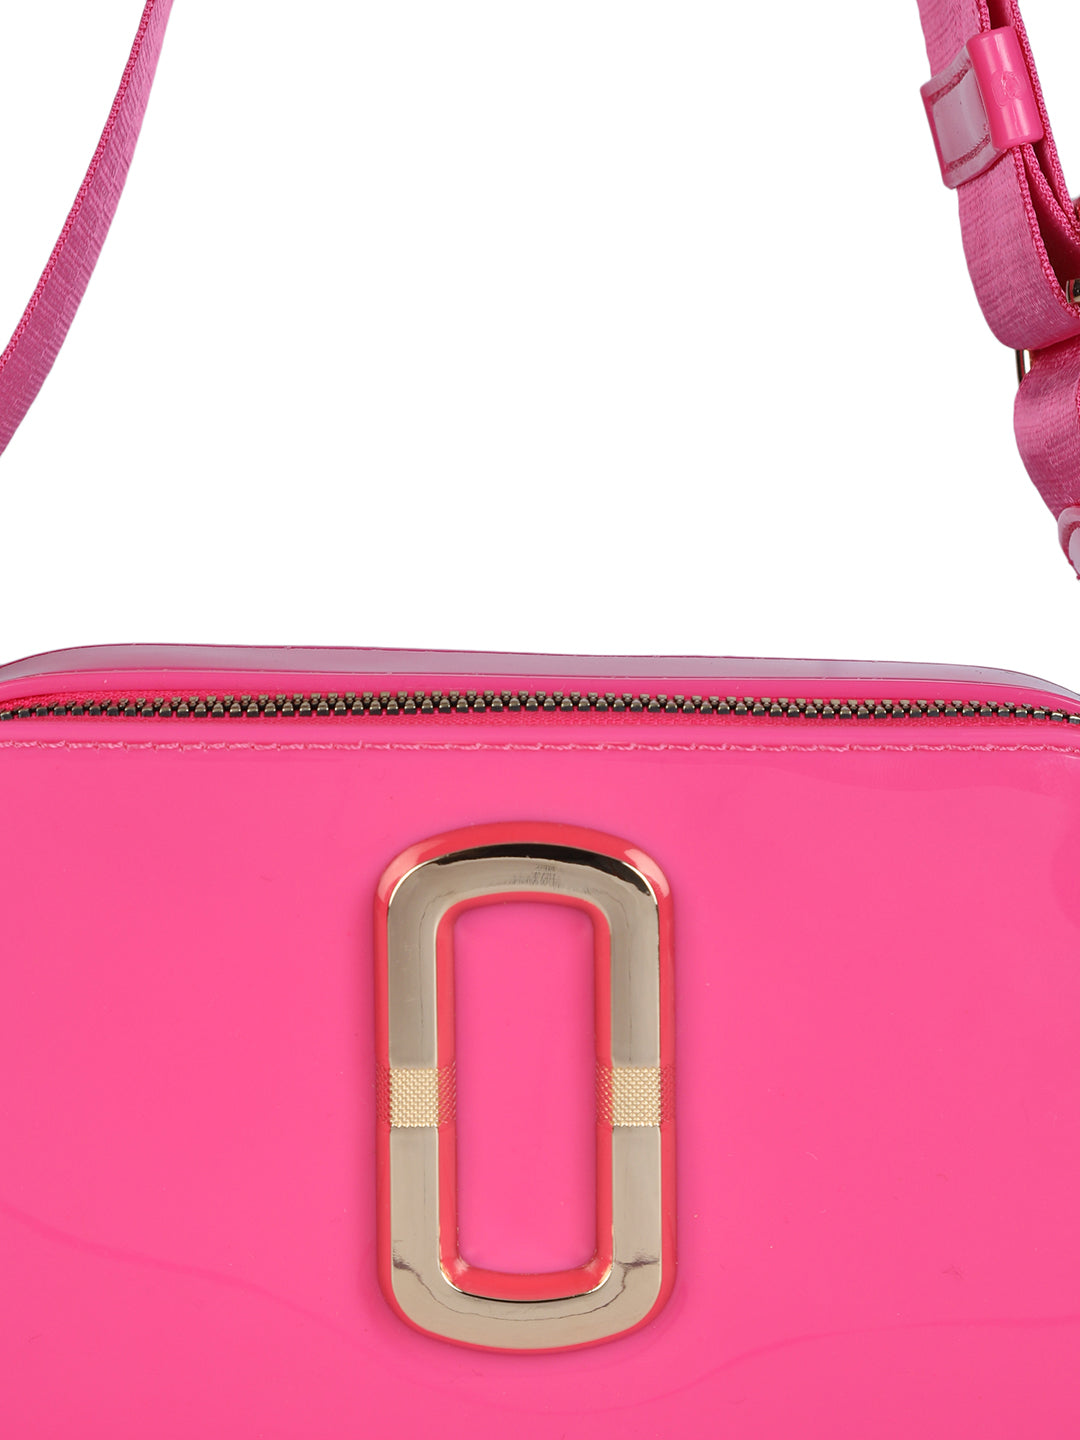 MINI WESST Women's Pink Sling Bag